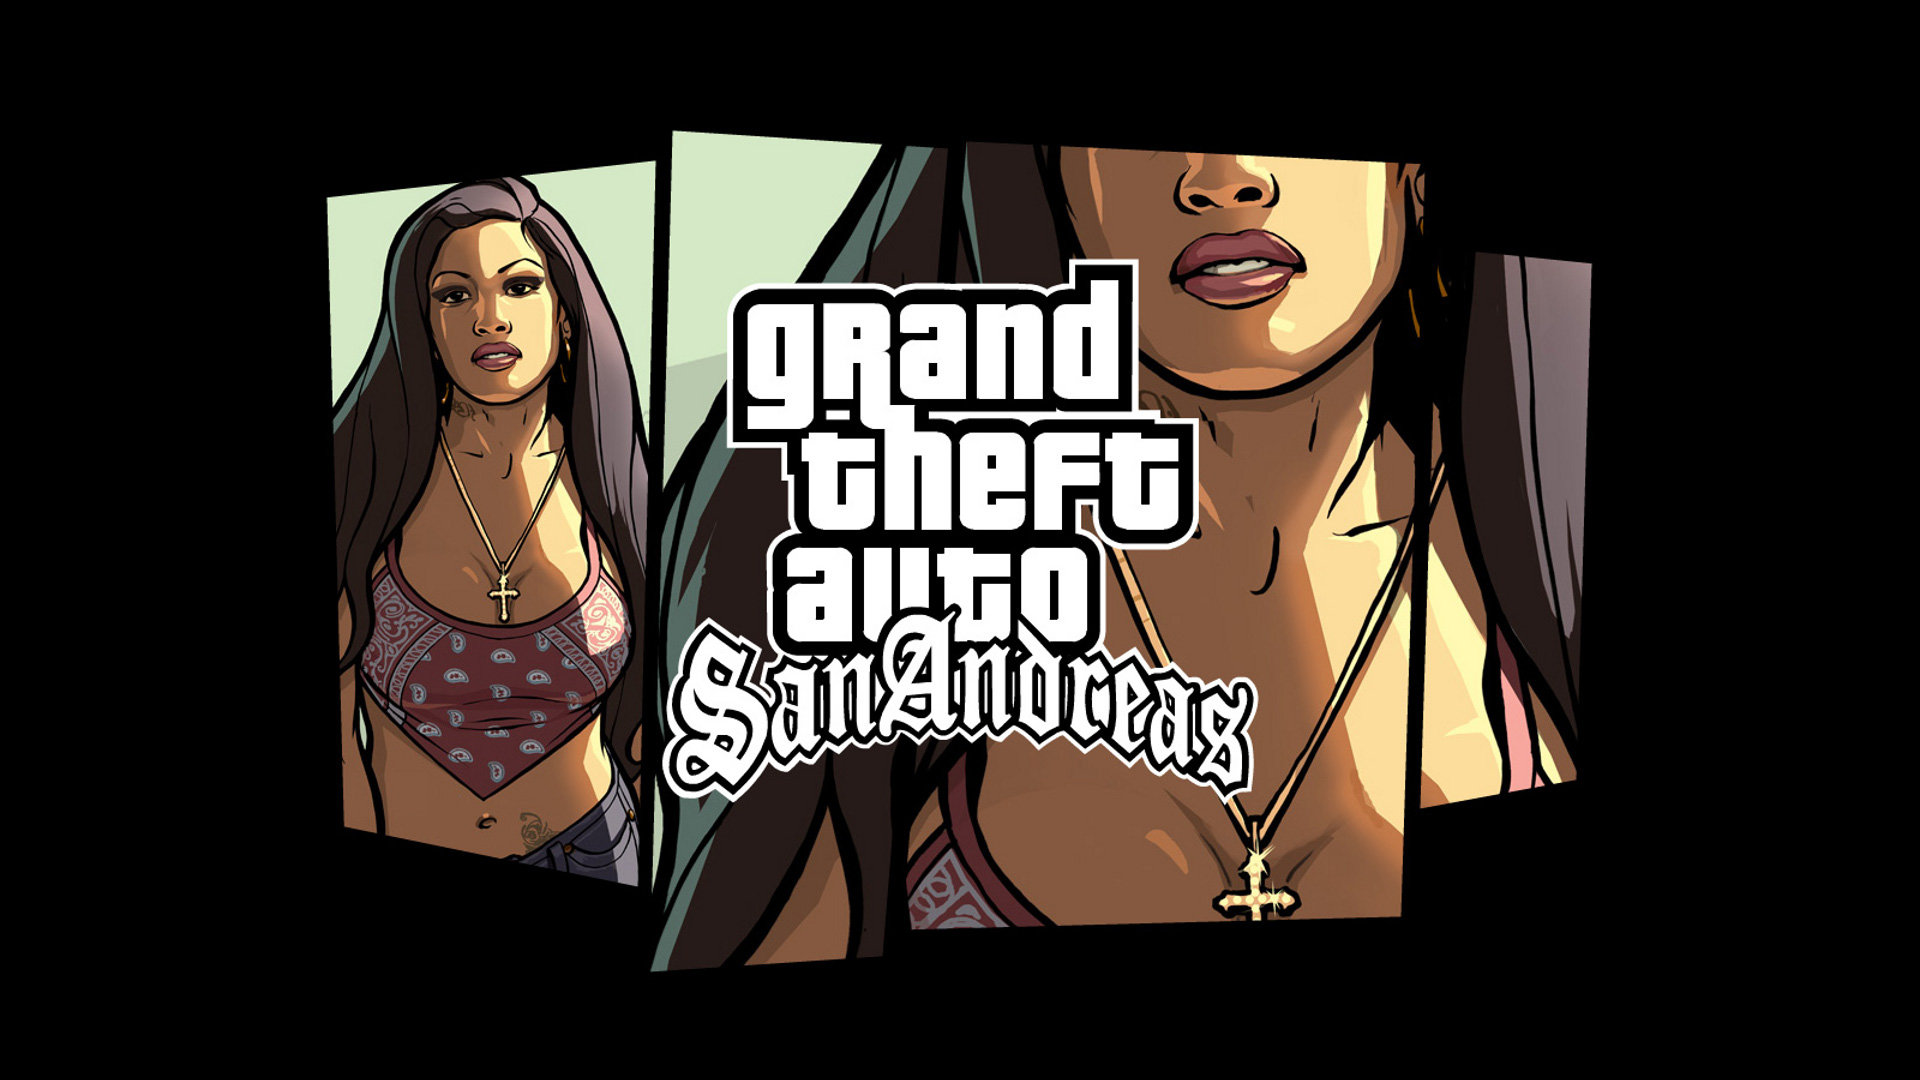 High resolution Grand Theft Auto: San Andreas (GTA SA) 1080p wallpaper ID:72704 for computer